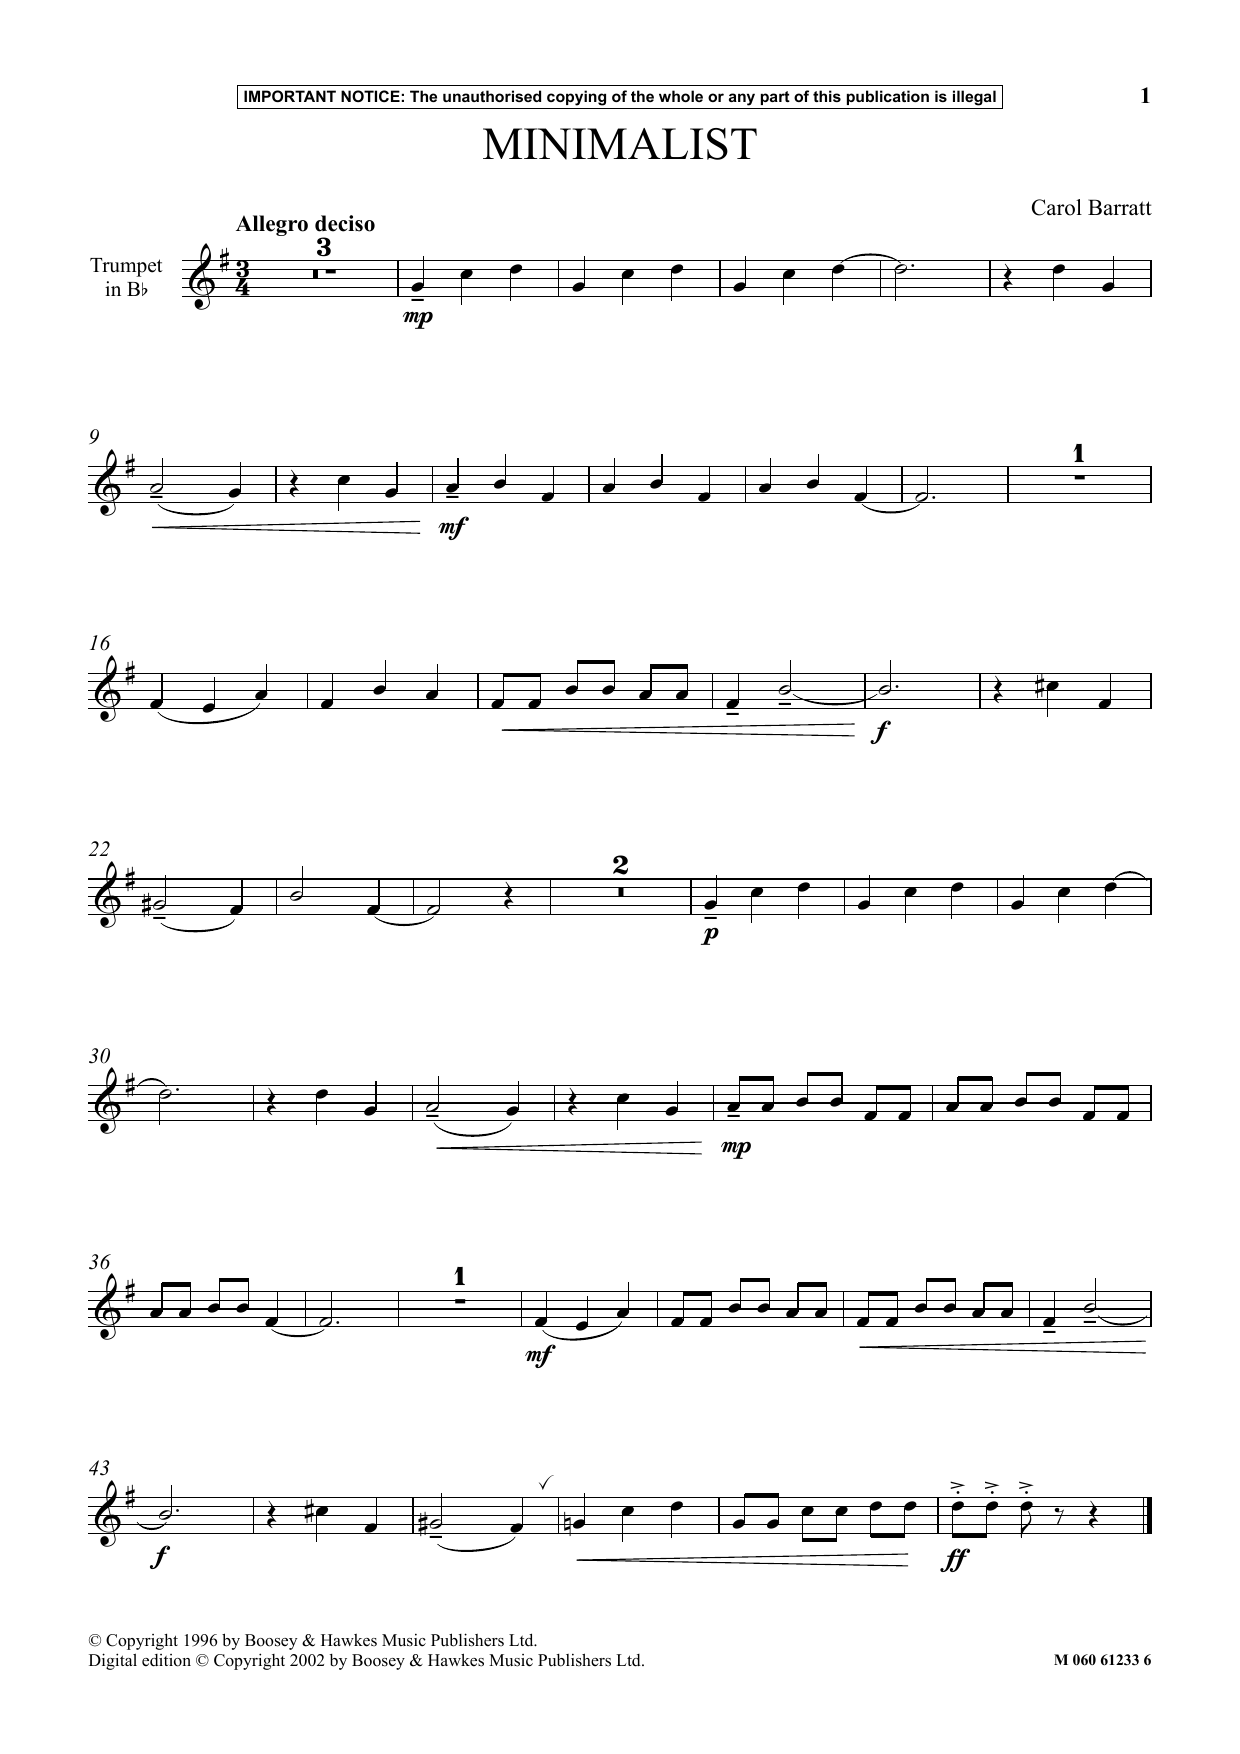 Carol Barratt Minimalist sheet music notes and chords arranged for Instrumental Solo